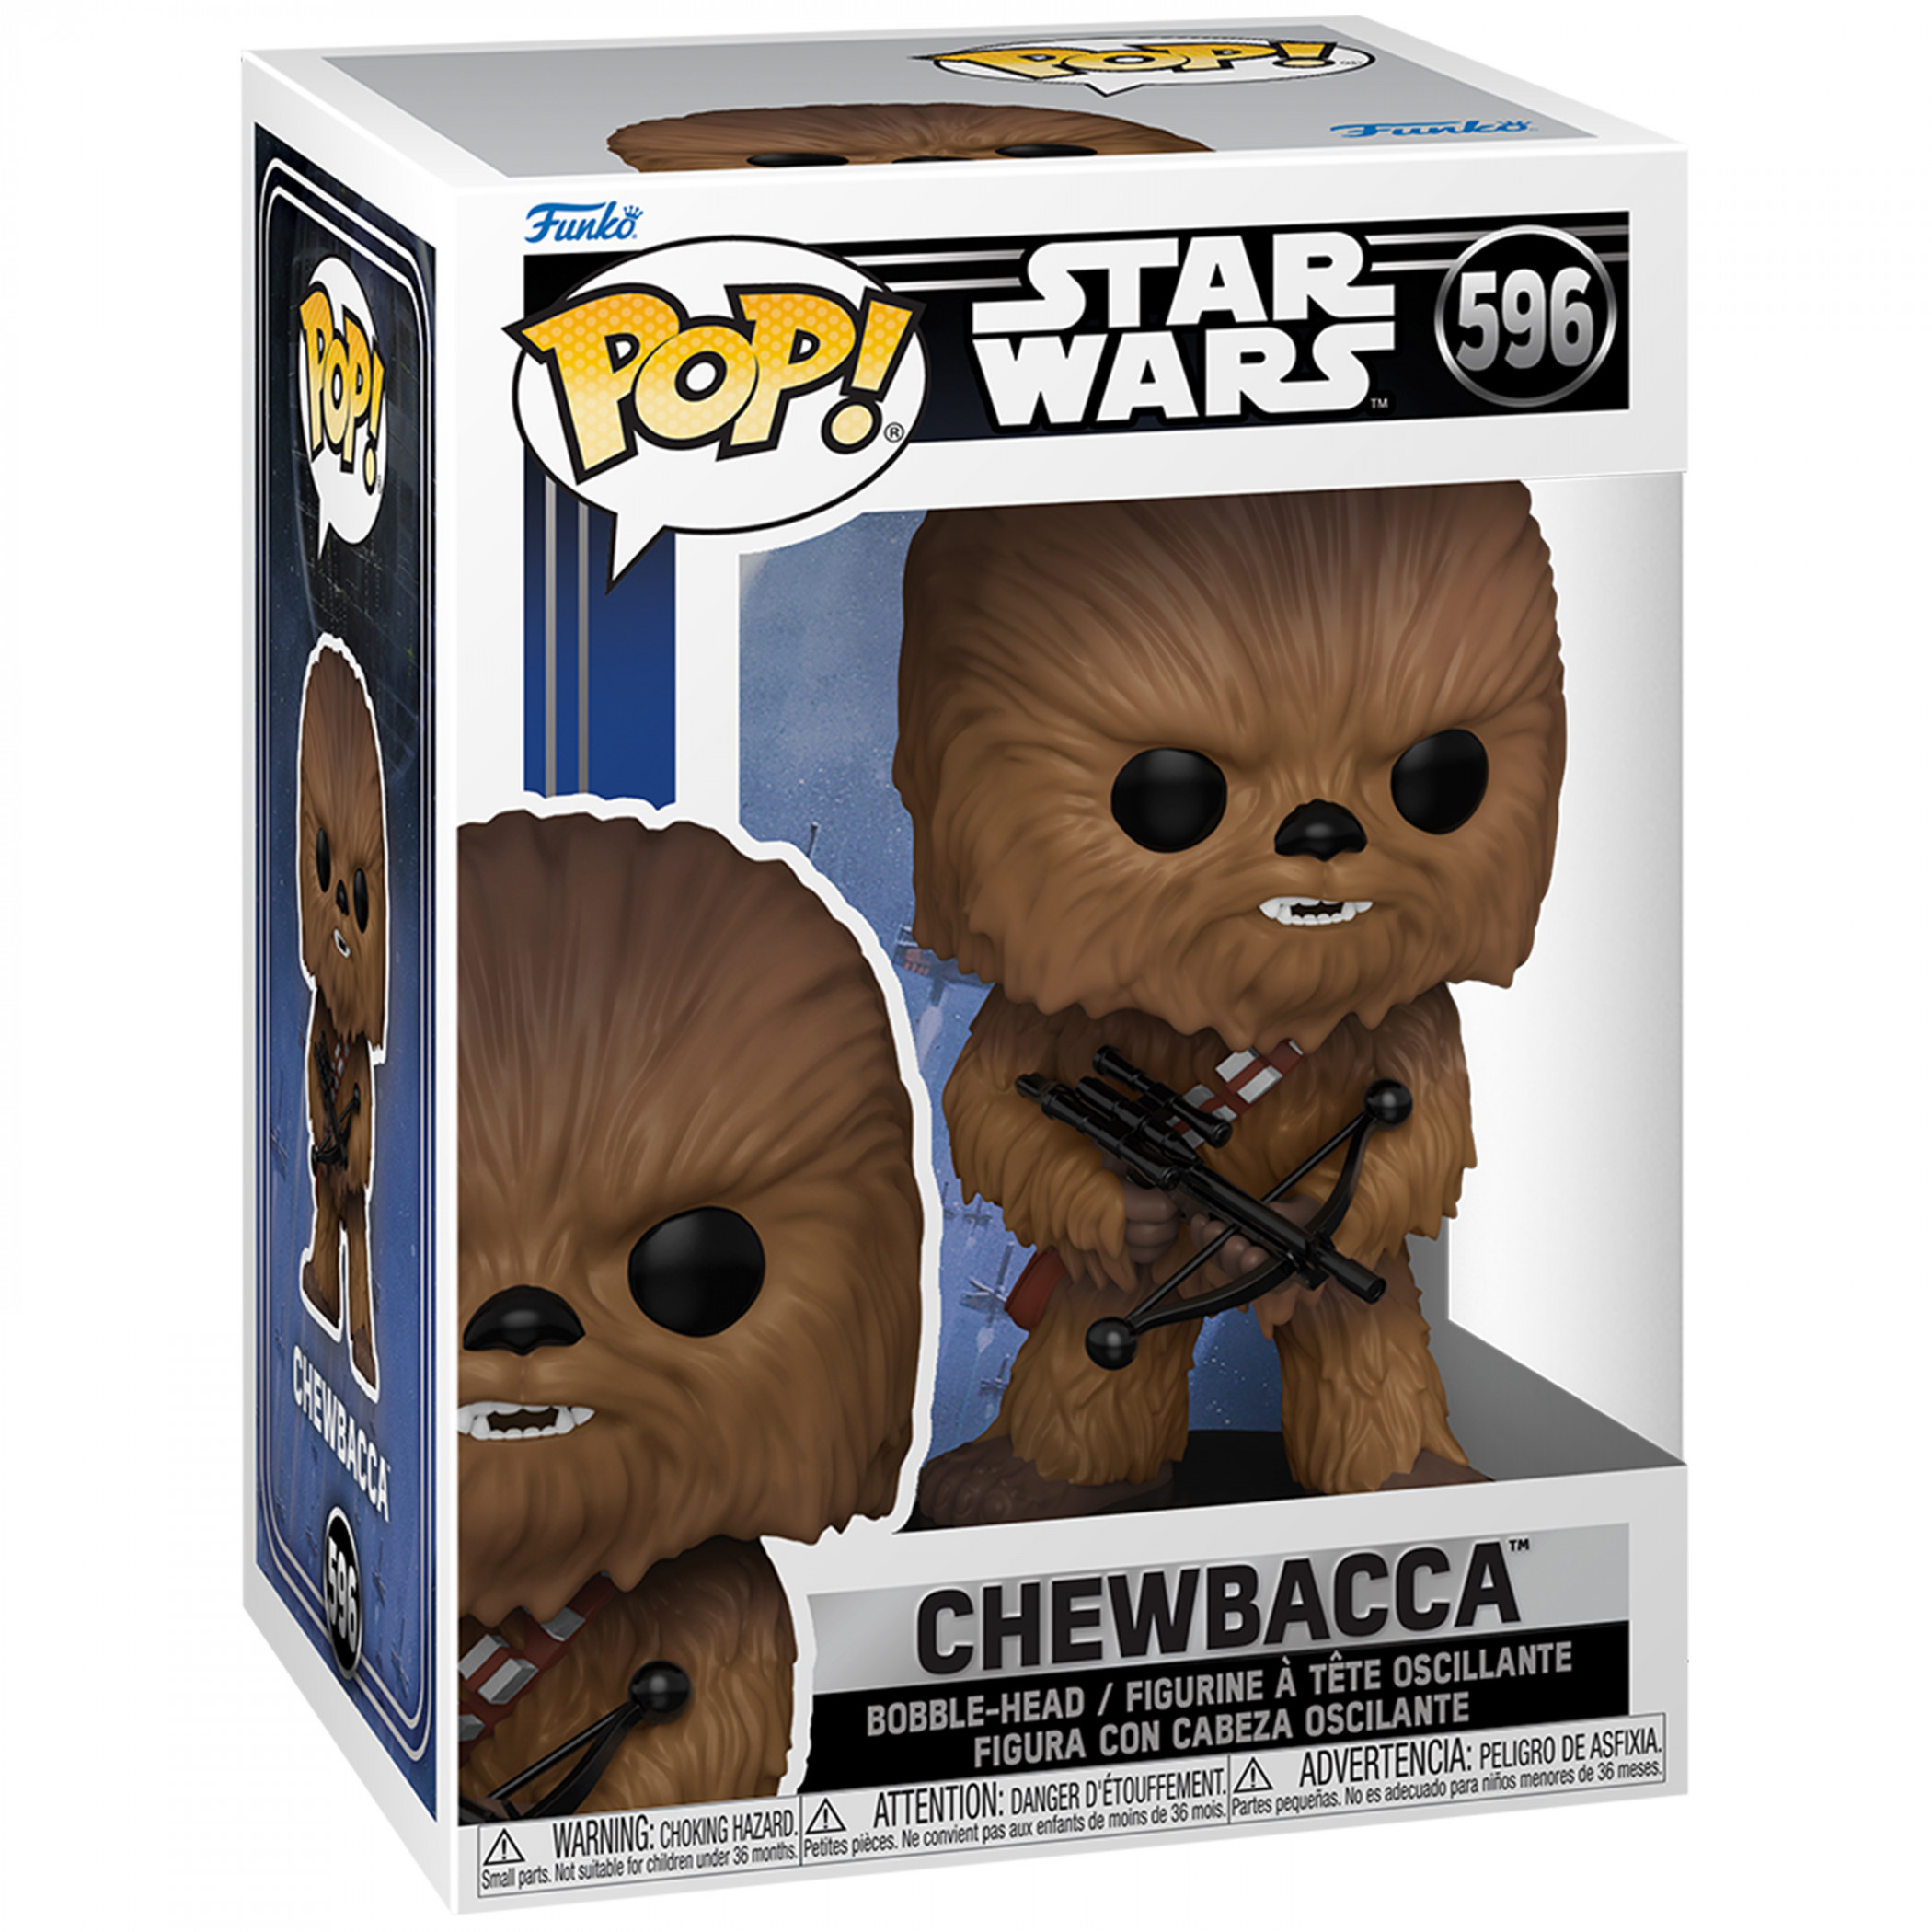 Star Wars Chewbacca Funko Pop! Vinyl Figure